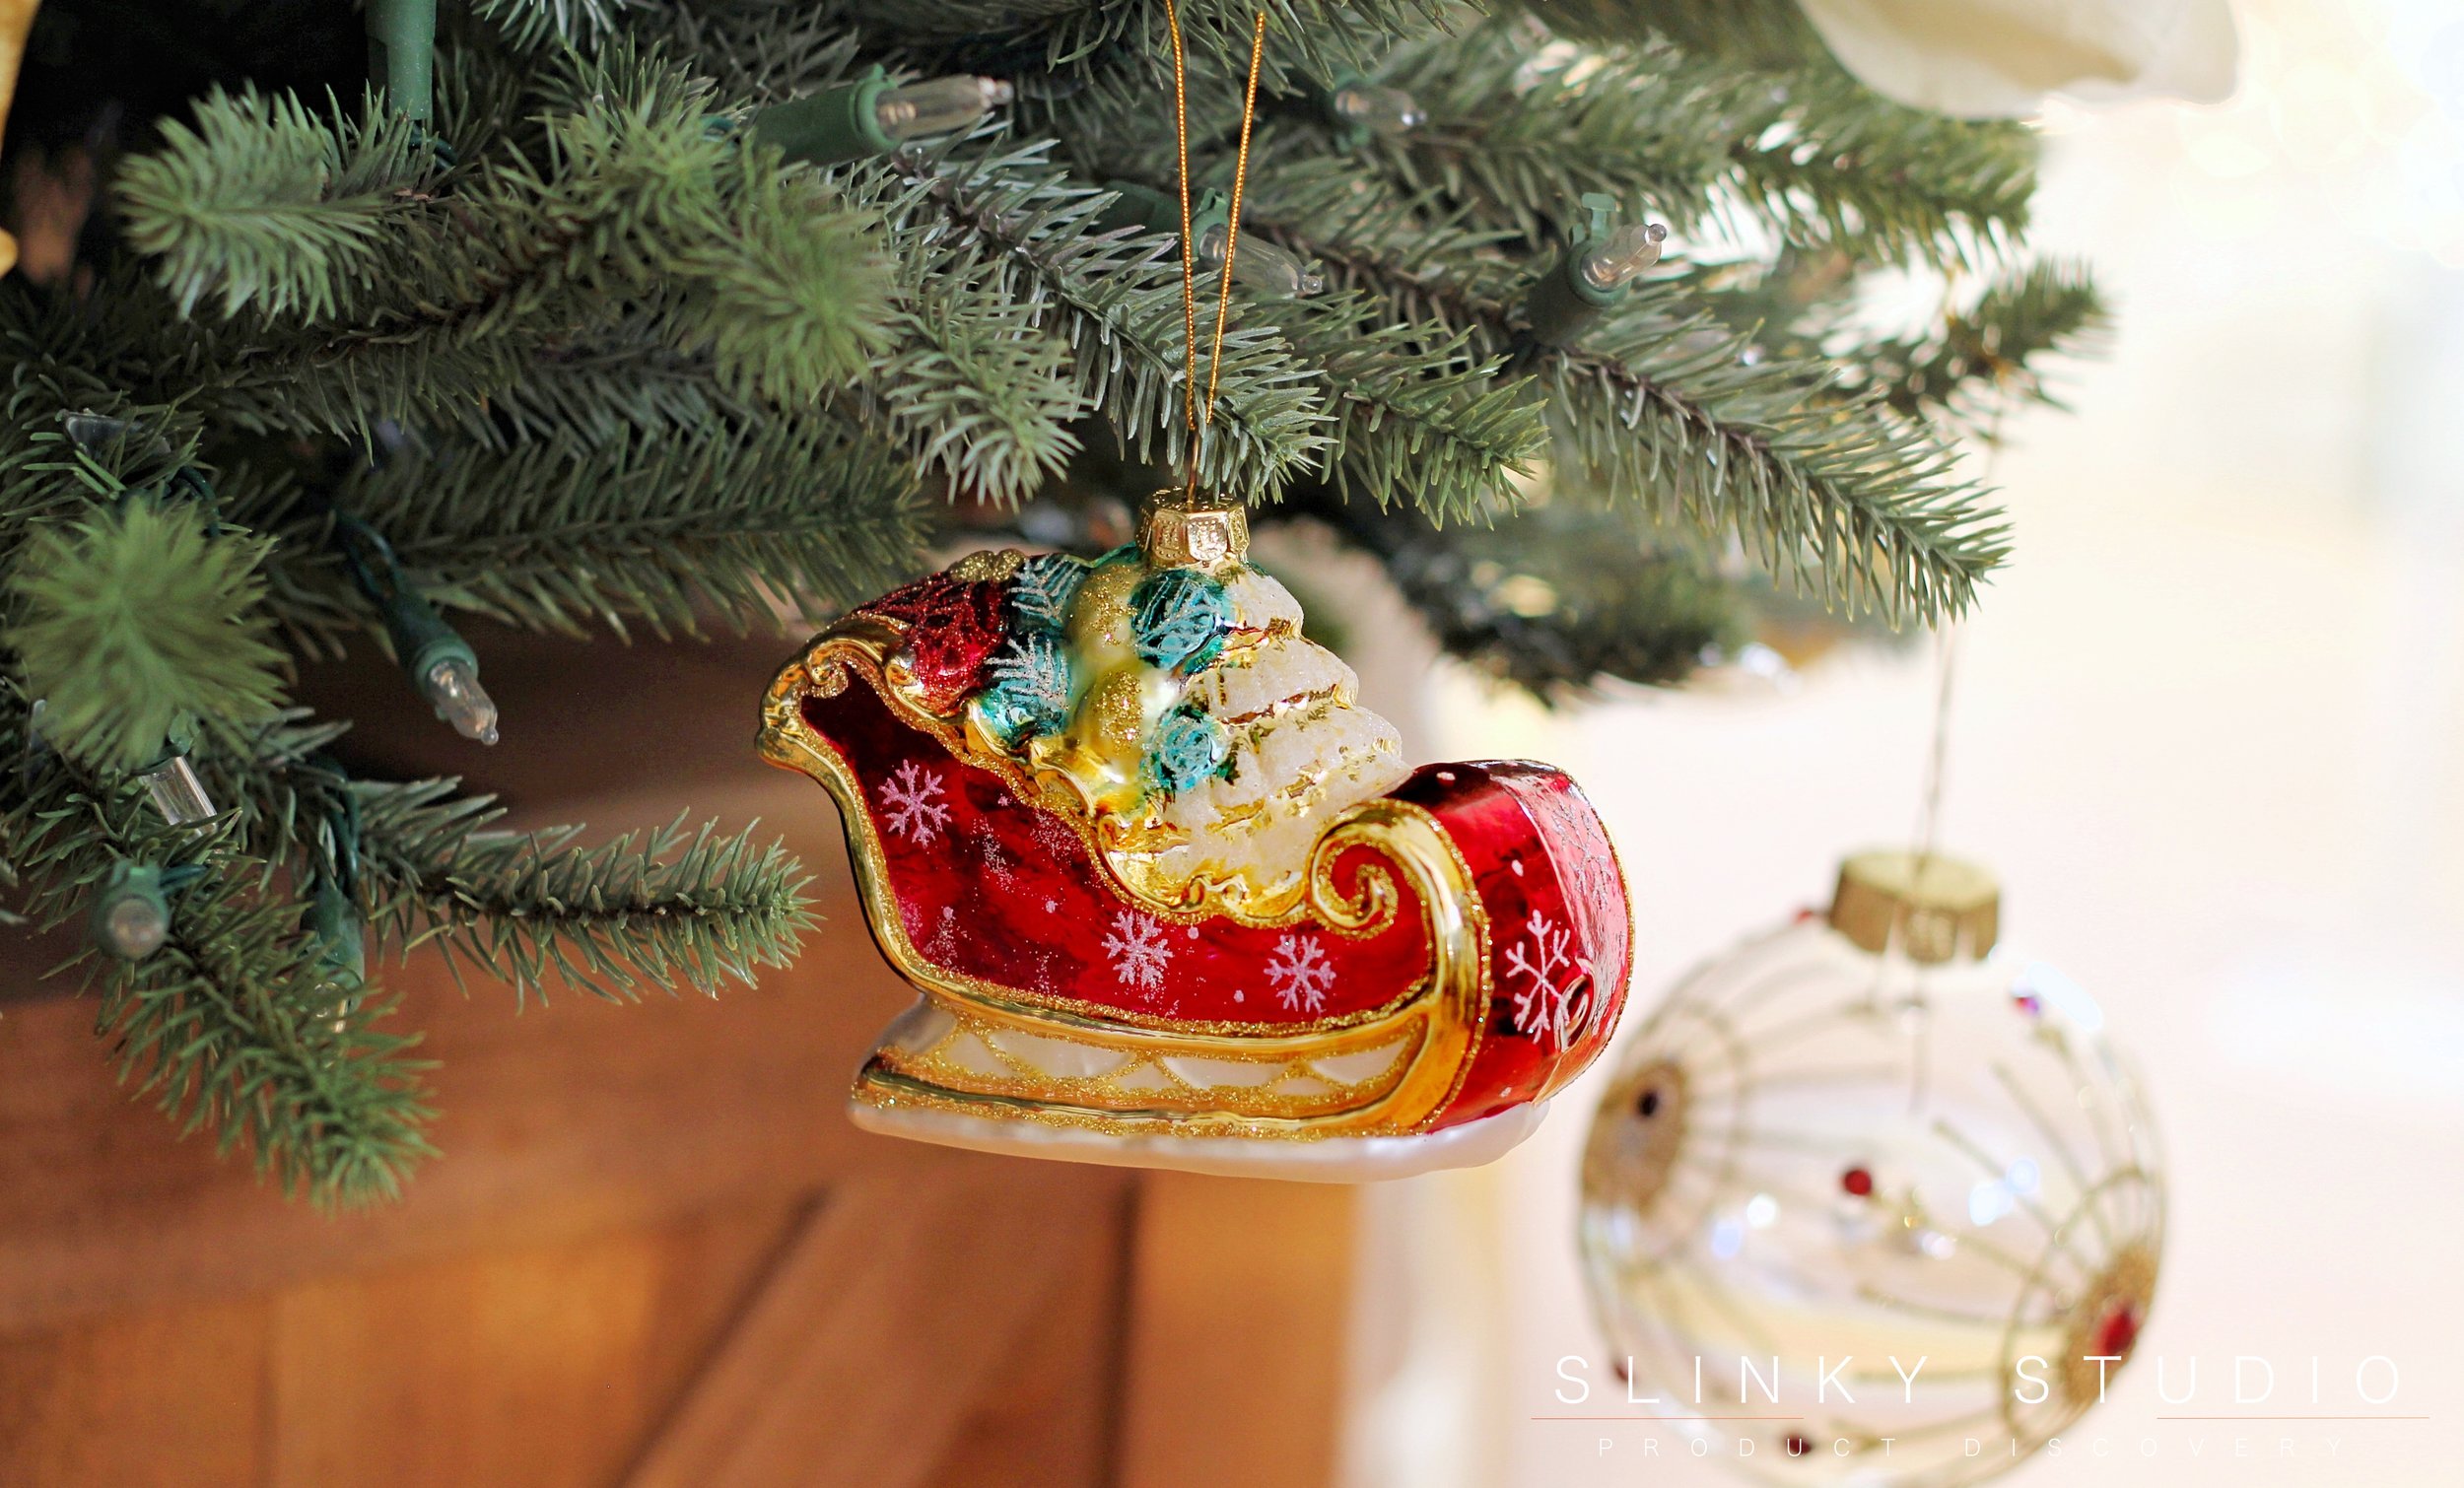 Balsam Royal Blue Spruce Christmas Tree Santa Sleigh.jpg